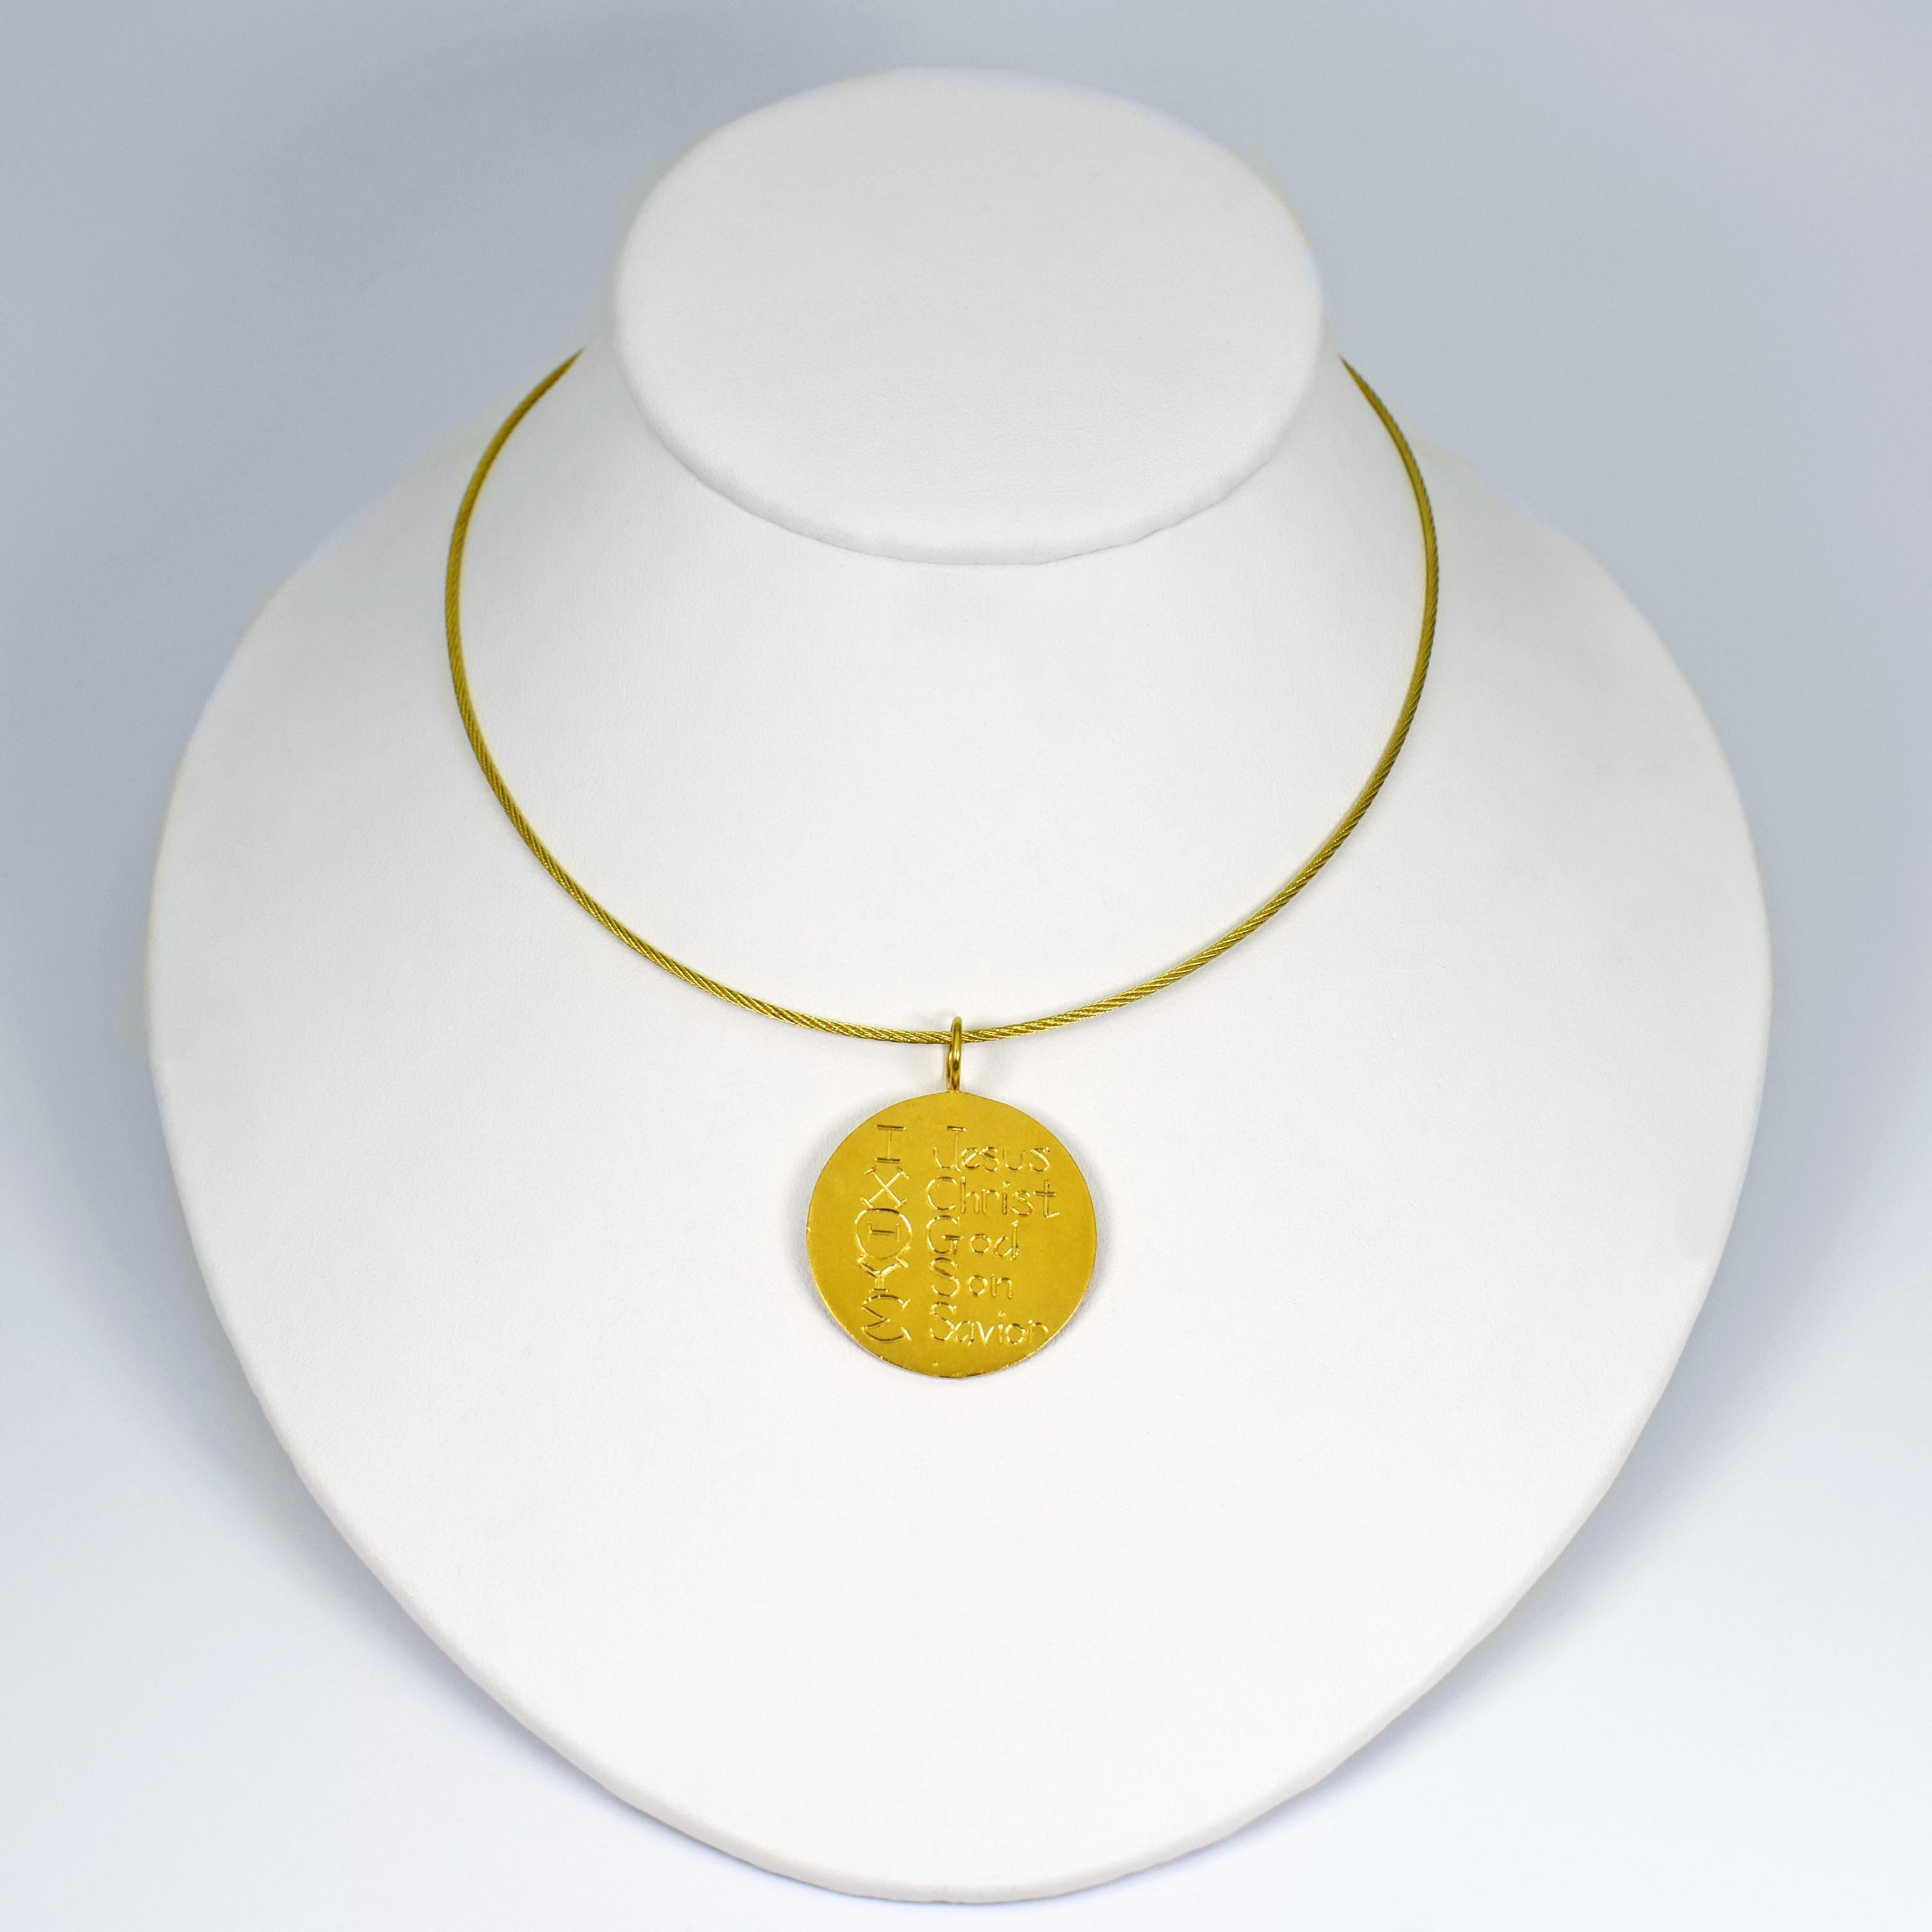 Collier avec pendentif en or 22 carats à breloques Ixthus en vente 1